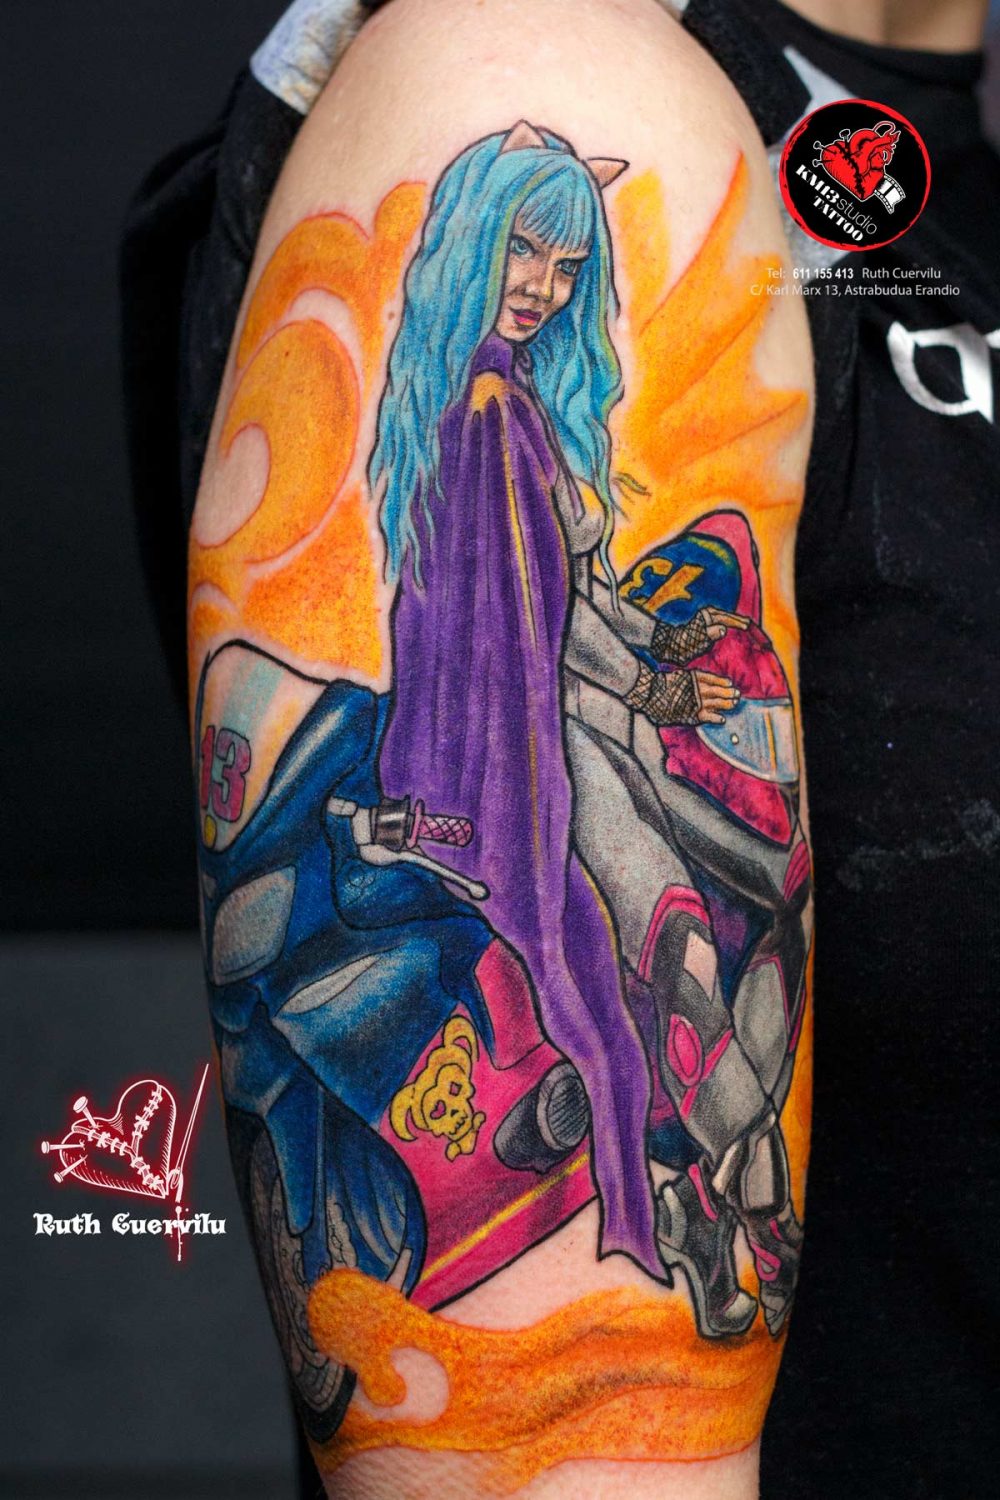 Tatuaje Moto R con modelo chica sheyla anime manga brazo - Ruth Cuervilu Tattoo - KM13 Studio - estudio de tatuajes erandio astrabudua bilbao bizkaia